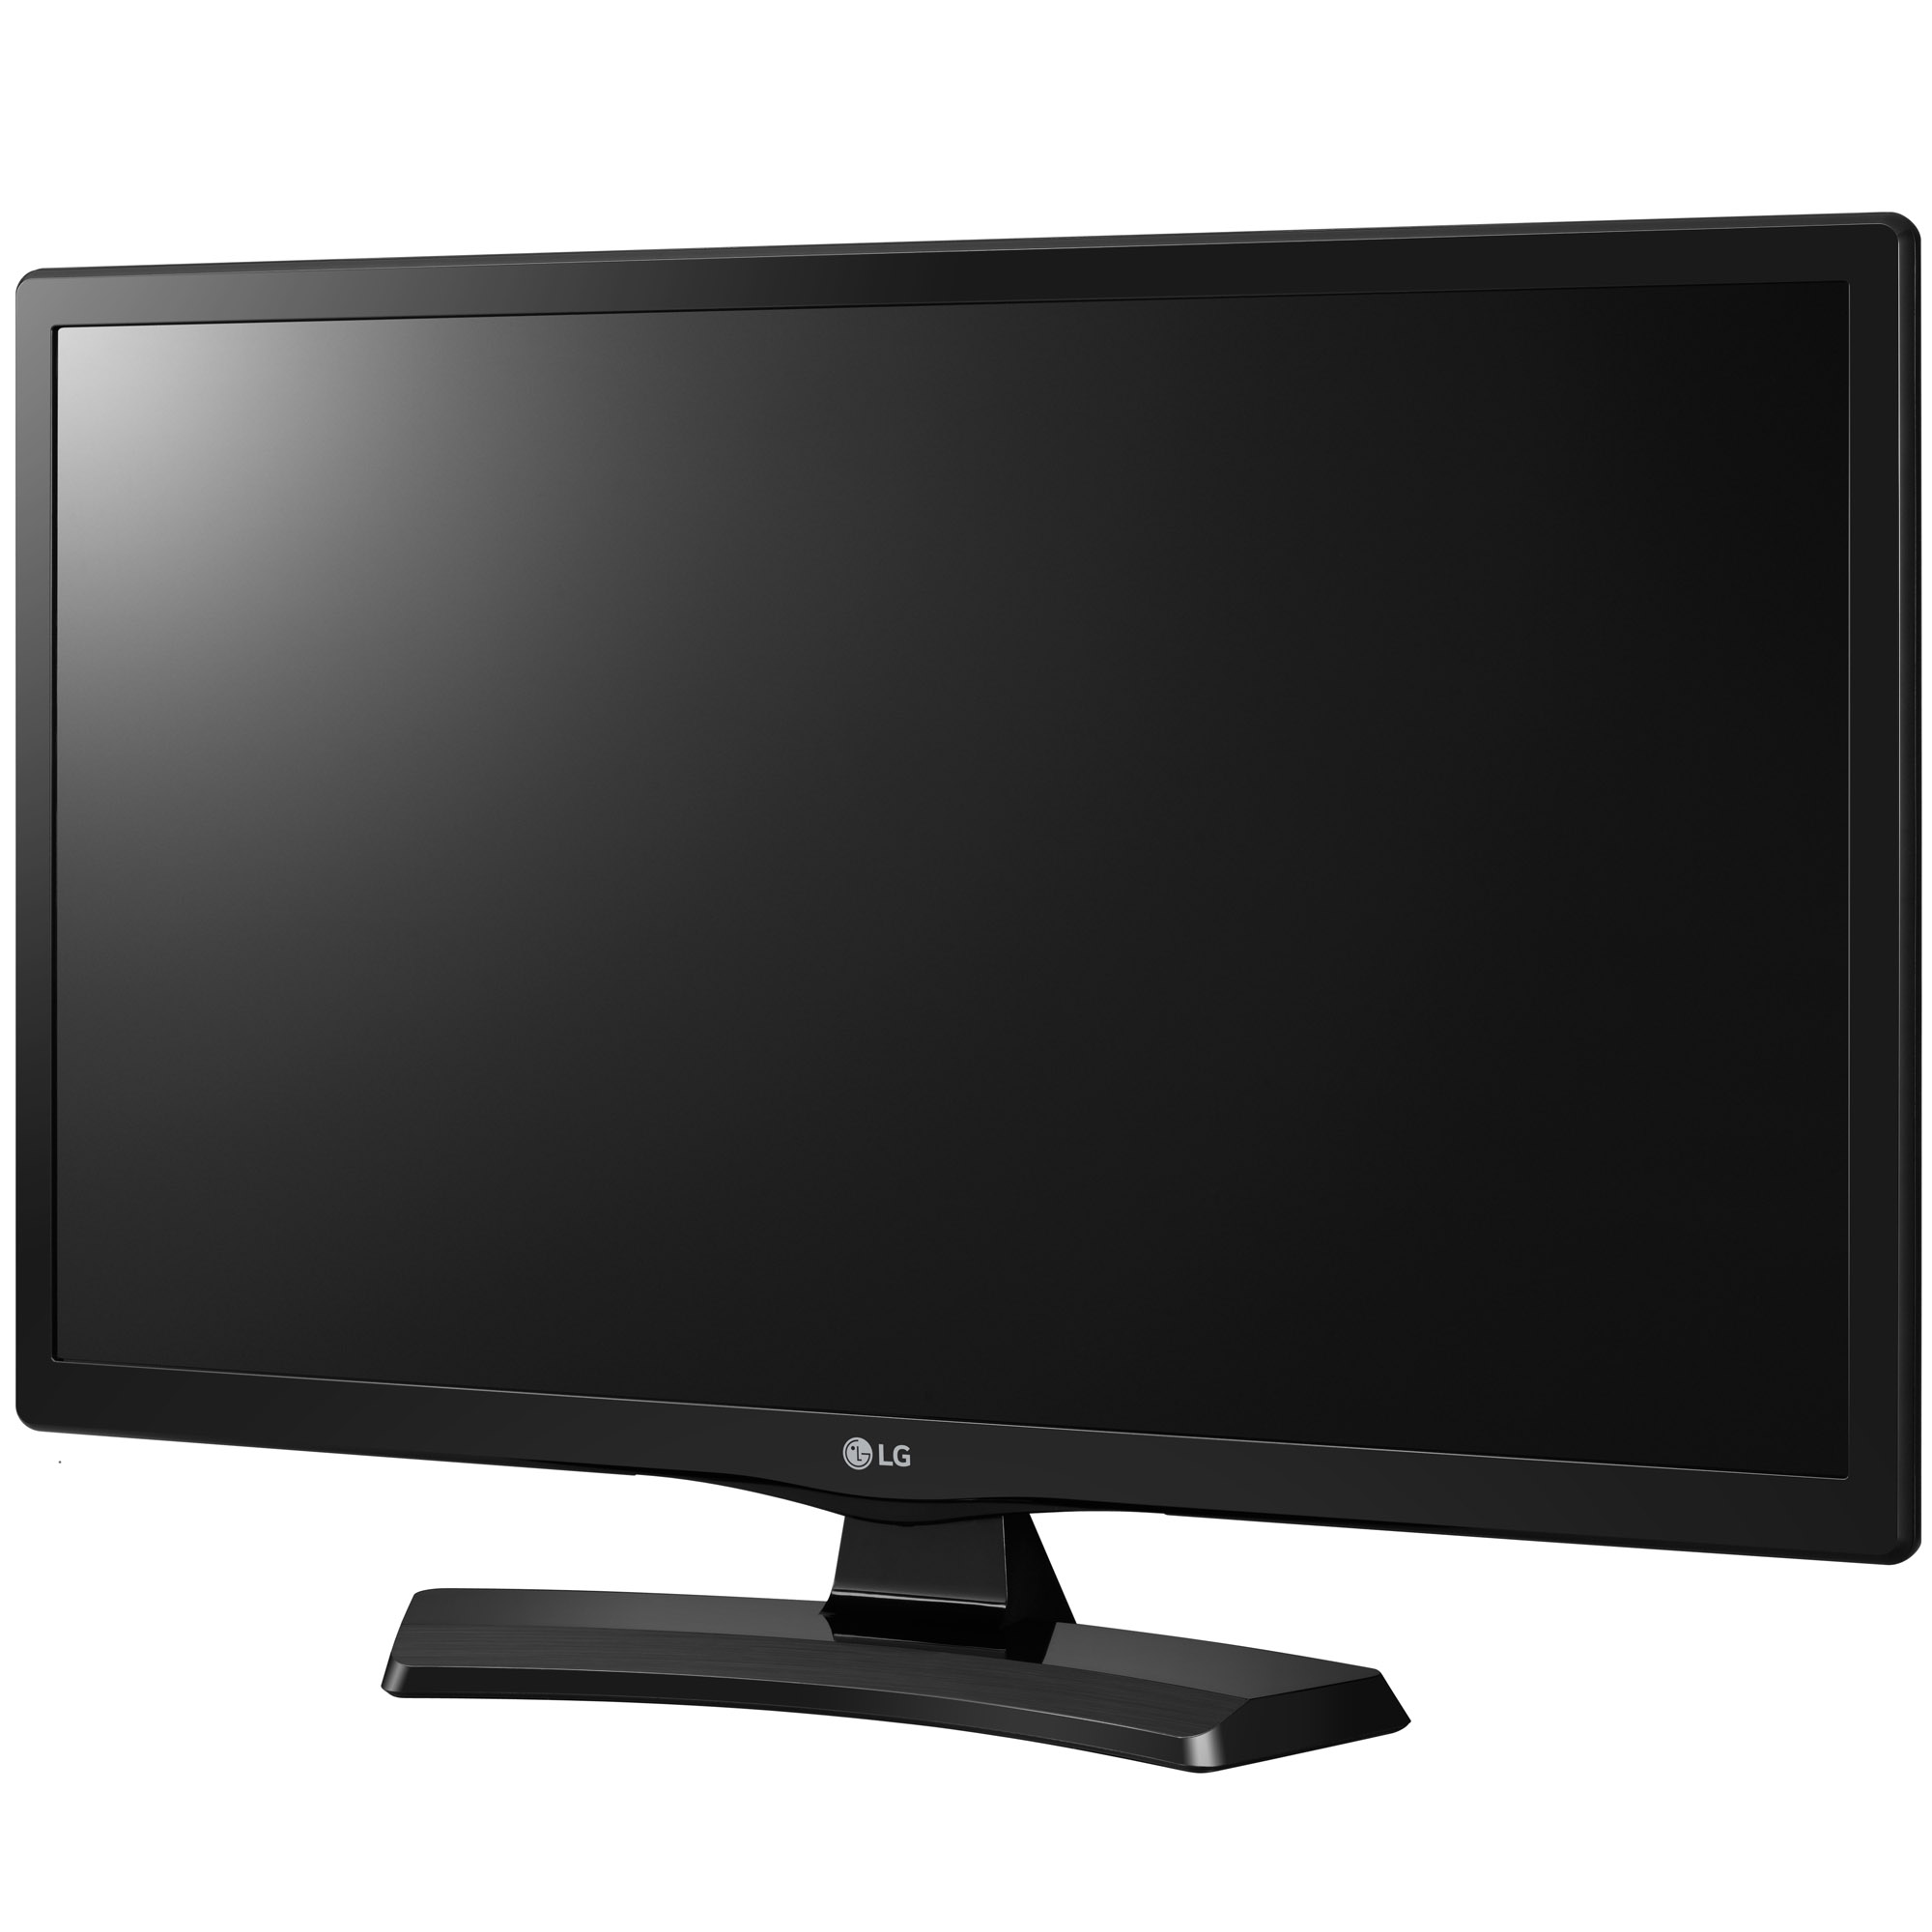 Экран для телевизора lg. Монитор LG 22ea53s. Монитор LG IPS led 22ea53. Телевизор LG 28tl510s-PZ 27.5" (2019). Телевизор LG 24tl510v-PZ.